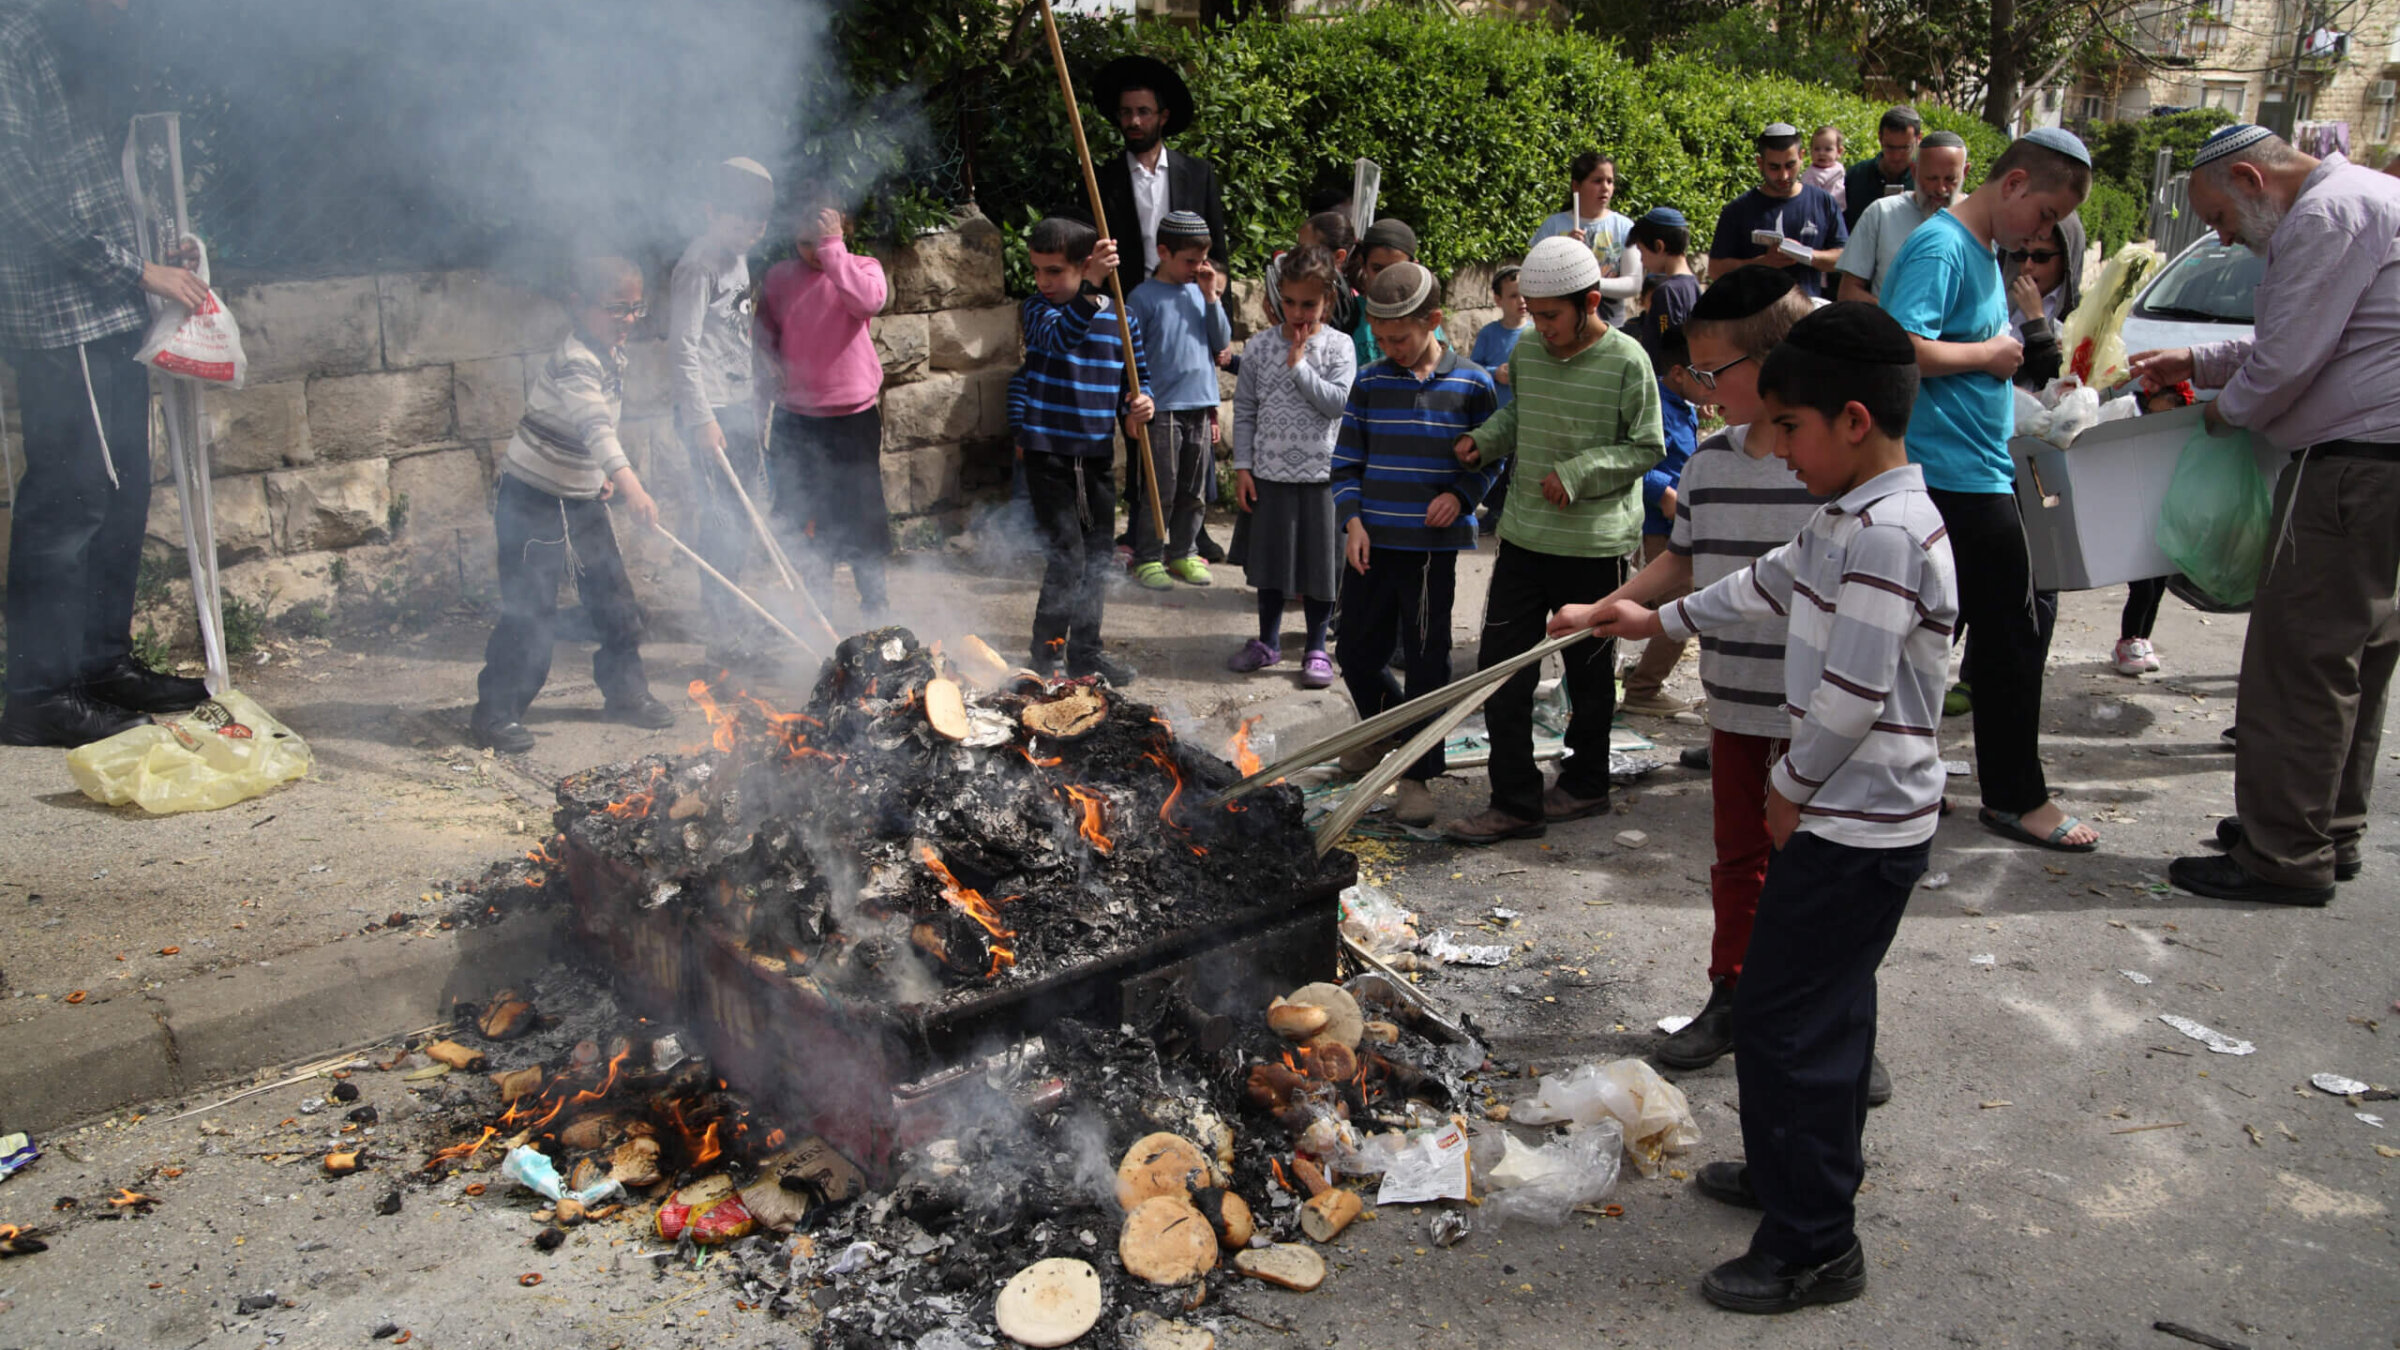 In the Kiryat Moshe neighborhood in Jerusalem, children poke at embers in the Orthodox Jewish practice of burning chametz (leaven, or not Kosher foods) on the morning of Passover eve, Jerusalem, Israel, April 10, 2017. 